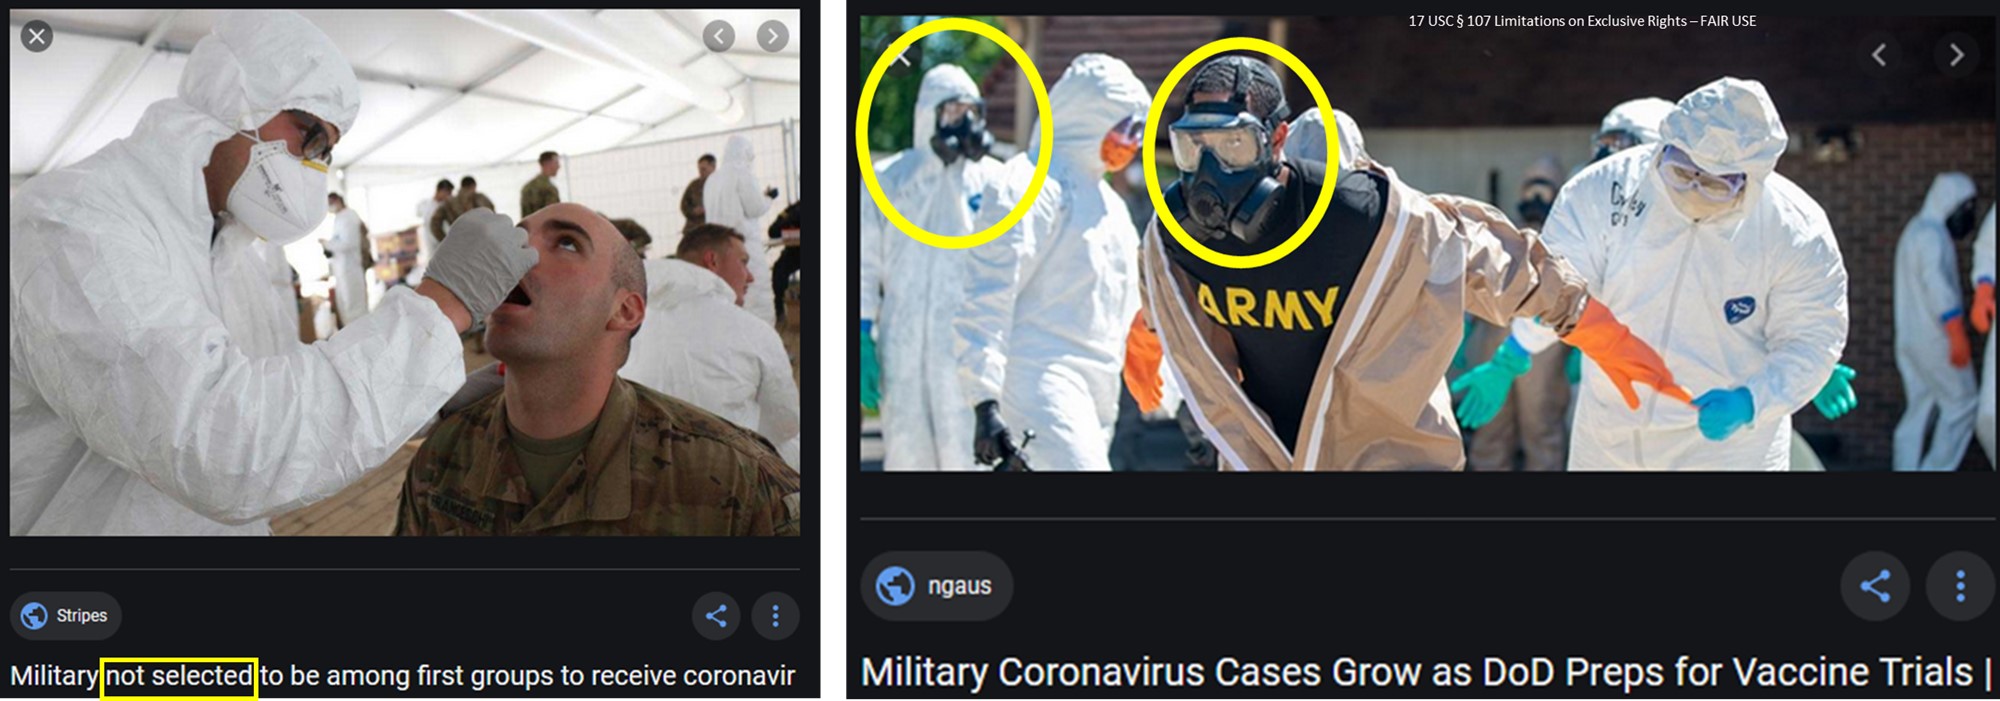 USA MILITARY Coronavirus BIOCHEMICAL Warfare OUTFITS